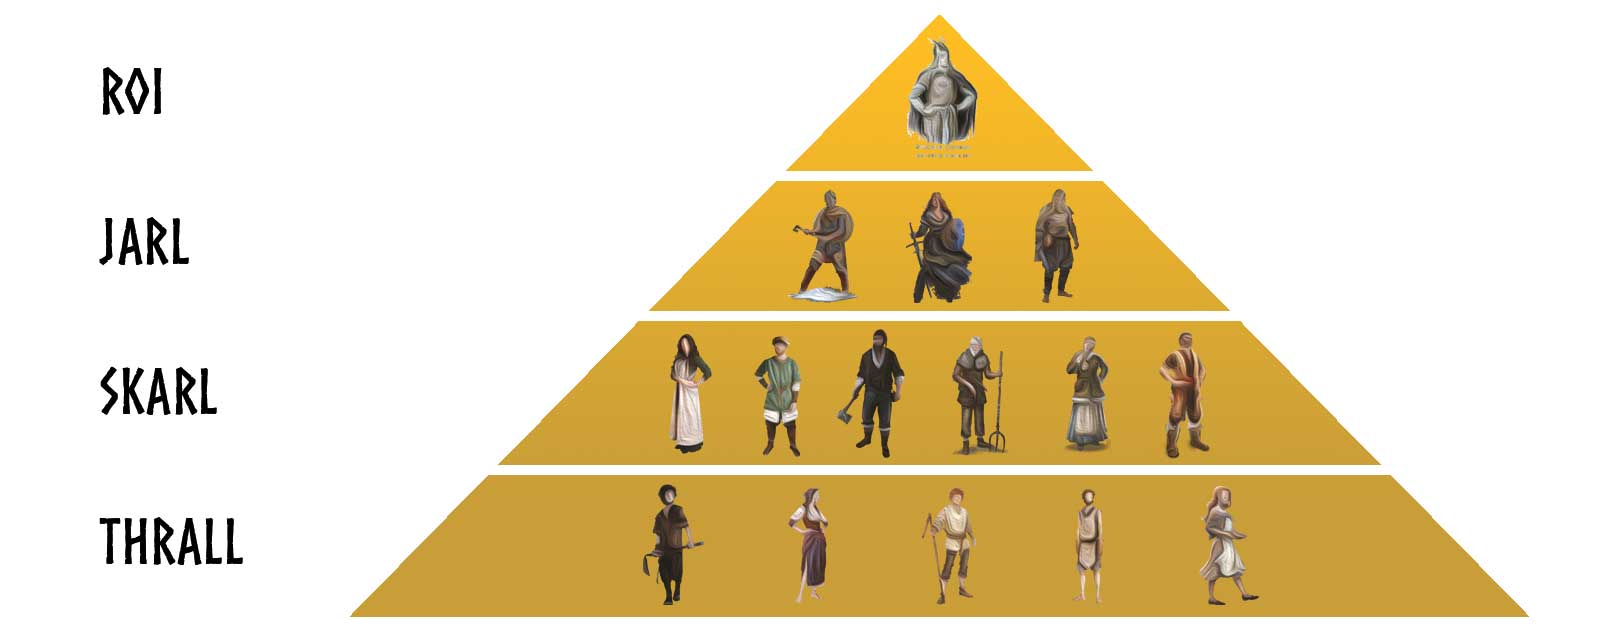 Hierarchie-Wikinger-Pyramide